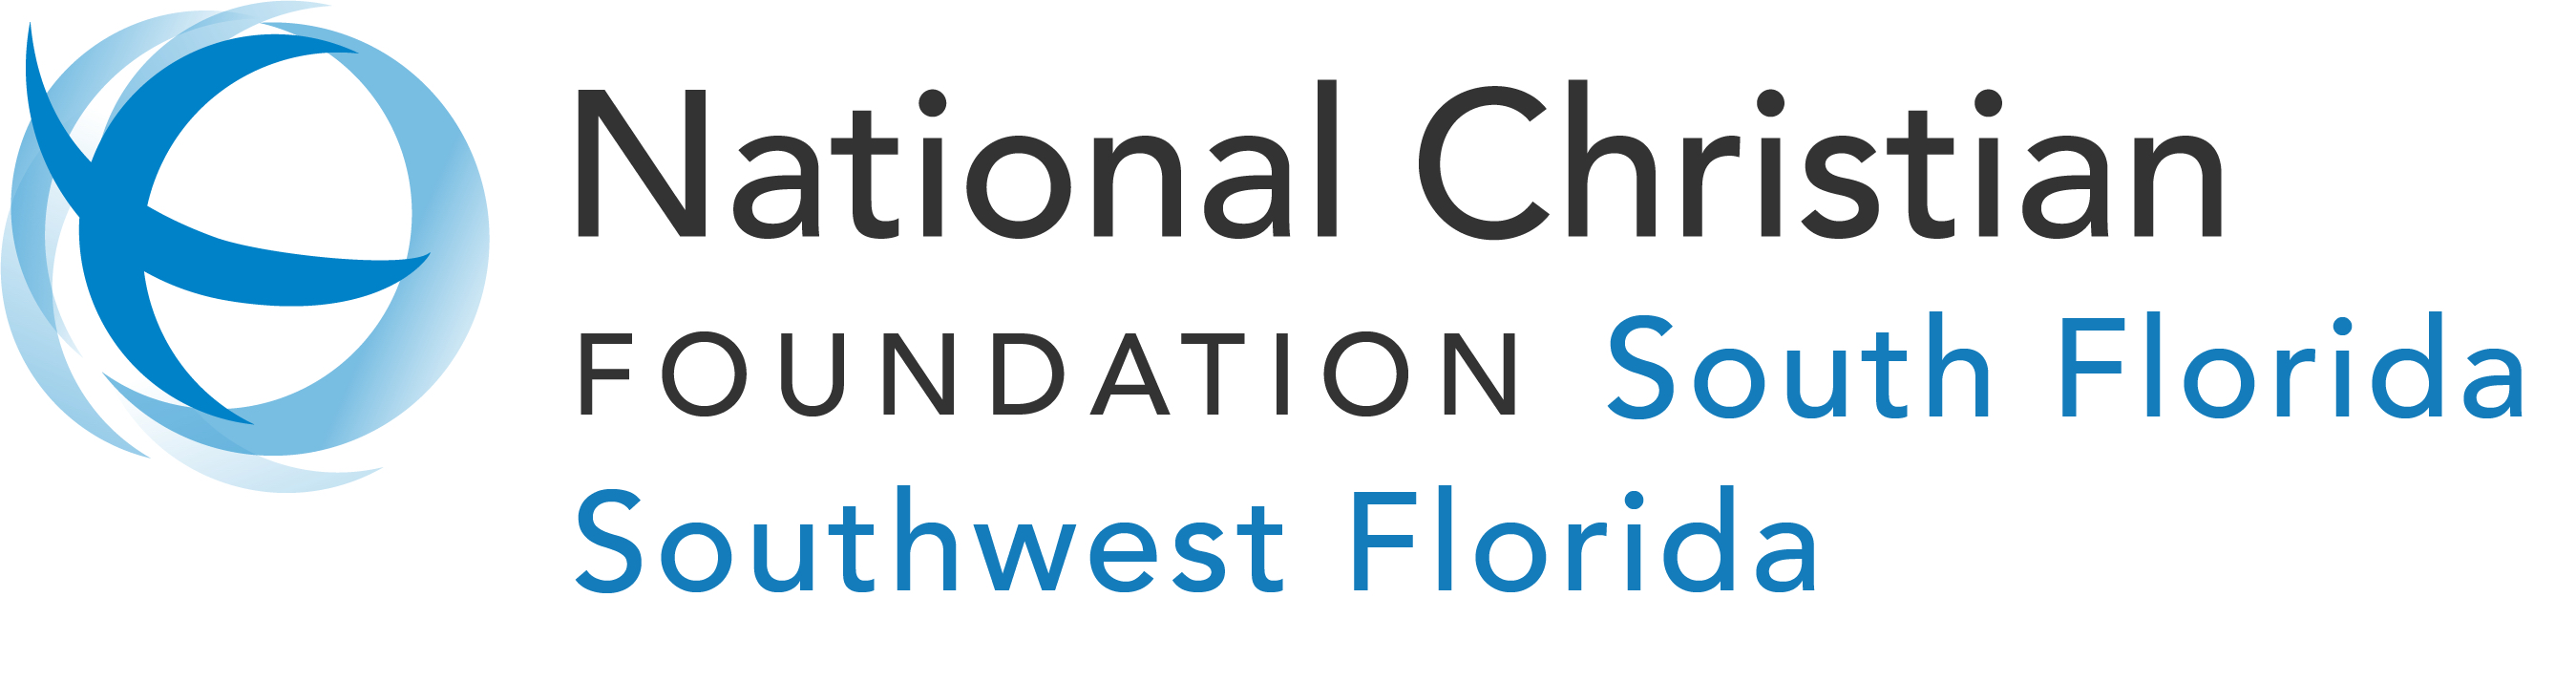 National Christian Foundation South Florida - Southwest Florida Office